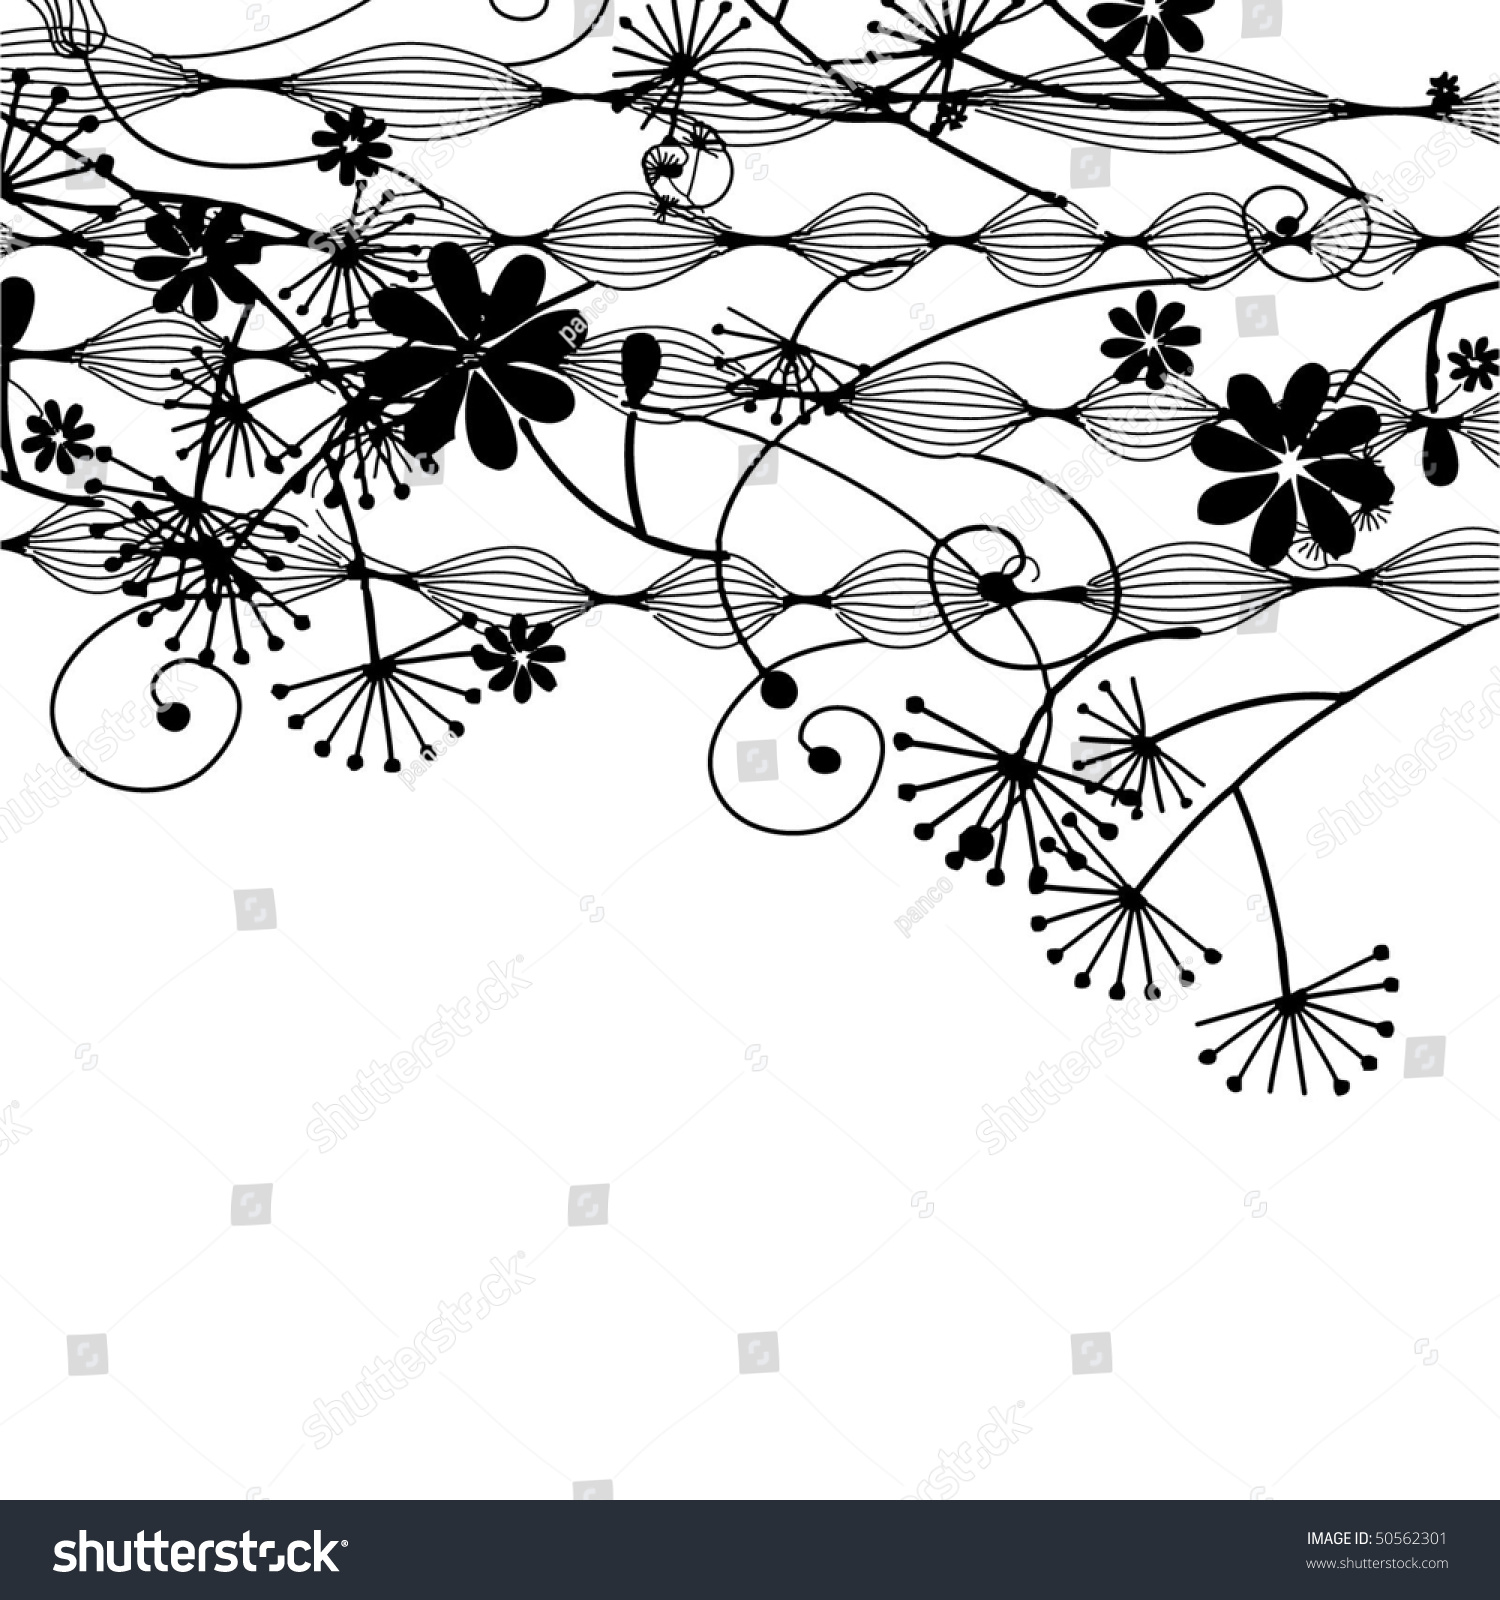 Ink Flowers Stock Vector Illustration 50562301 : Shutterstock